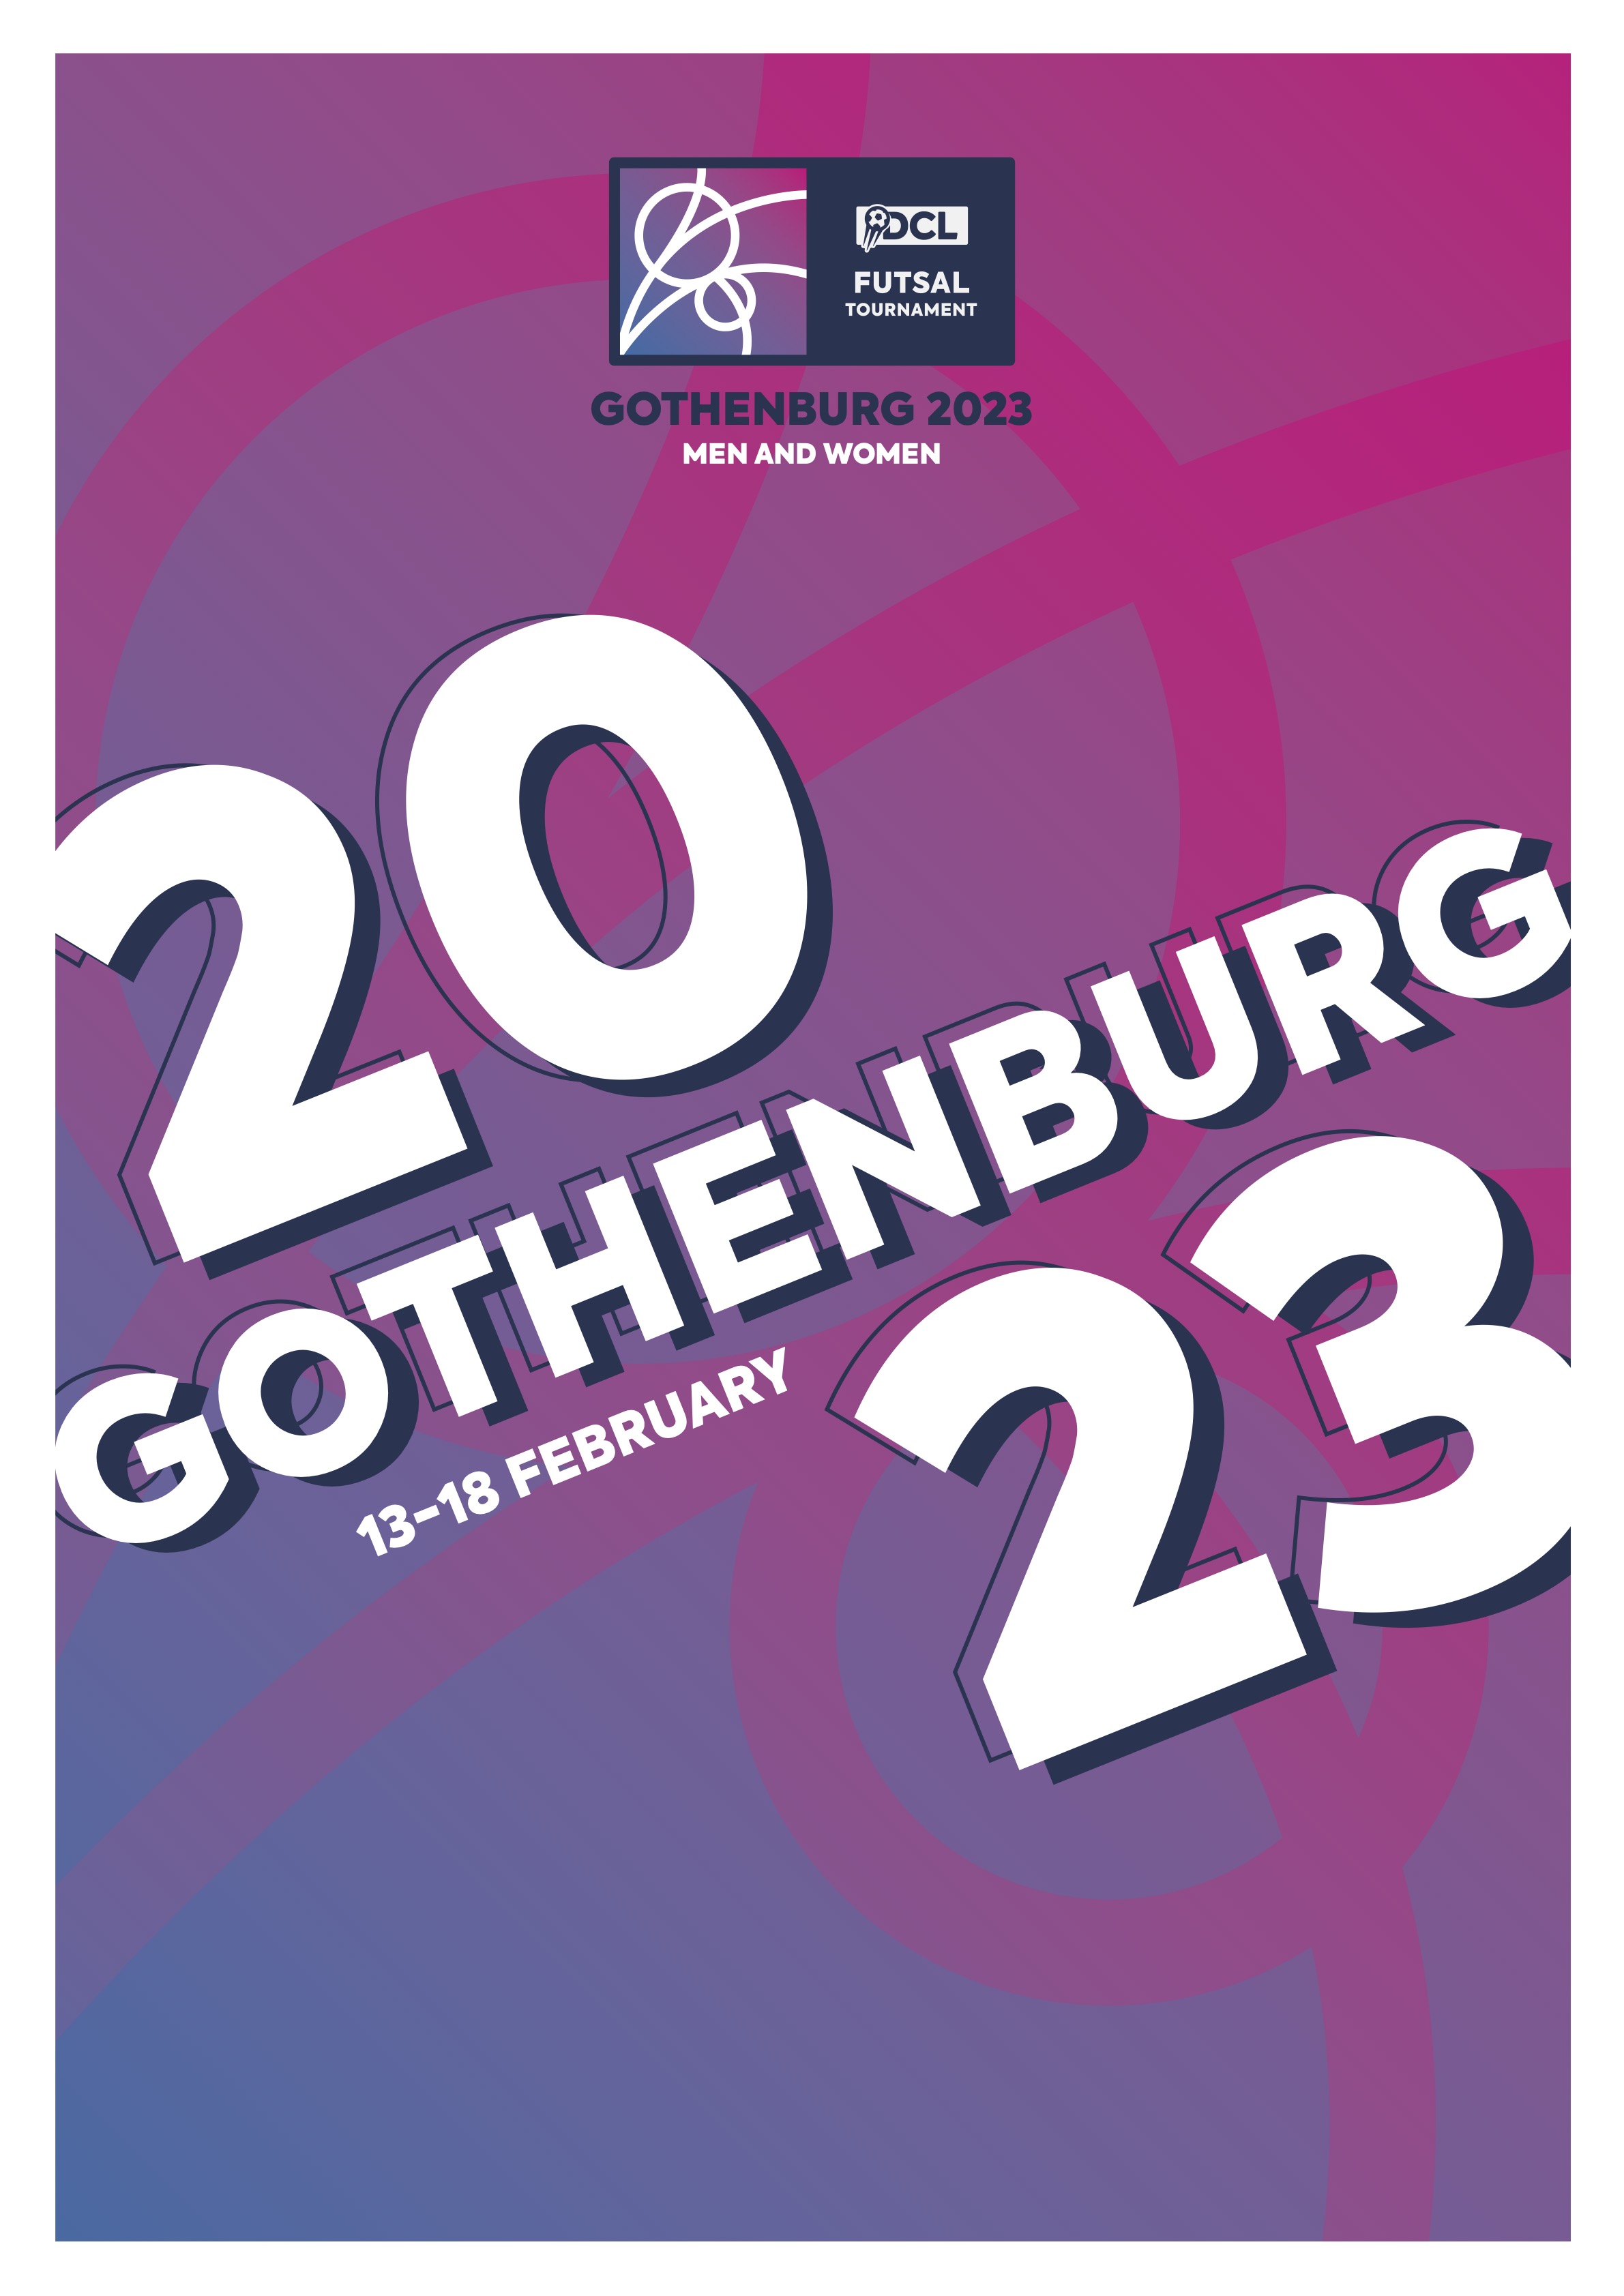 poster dcl futsal gothenburg 2023